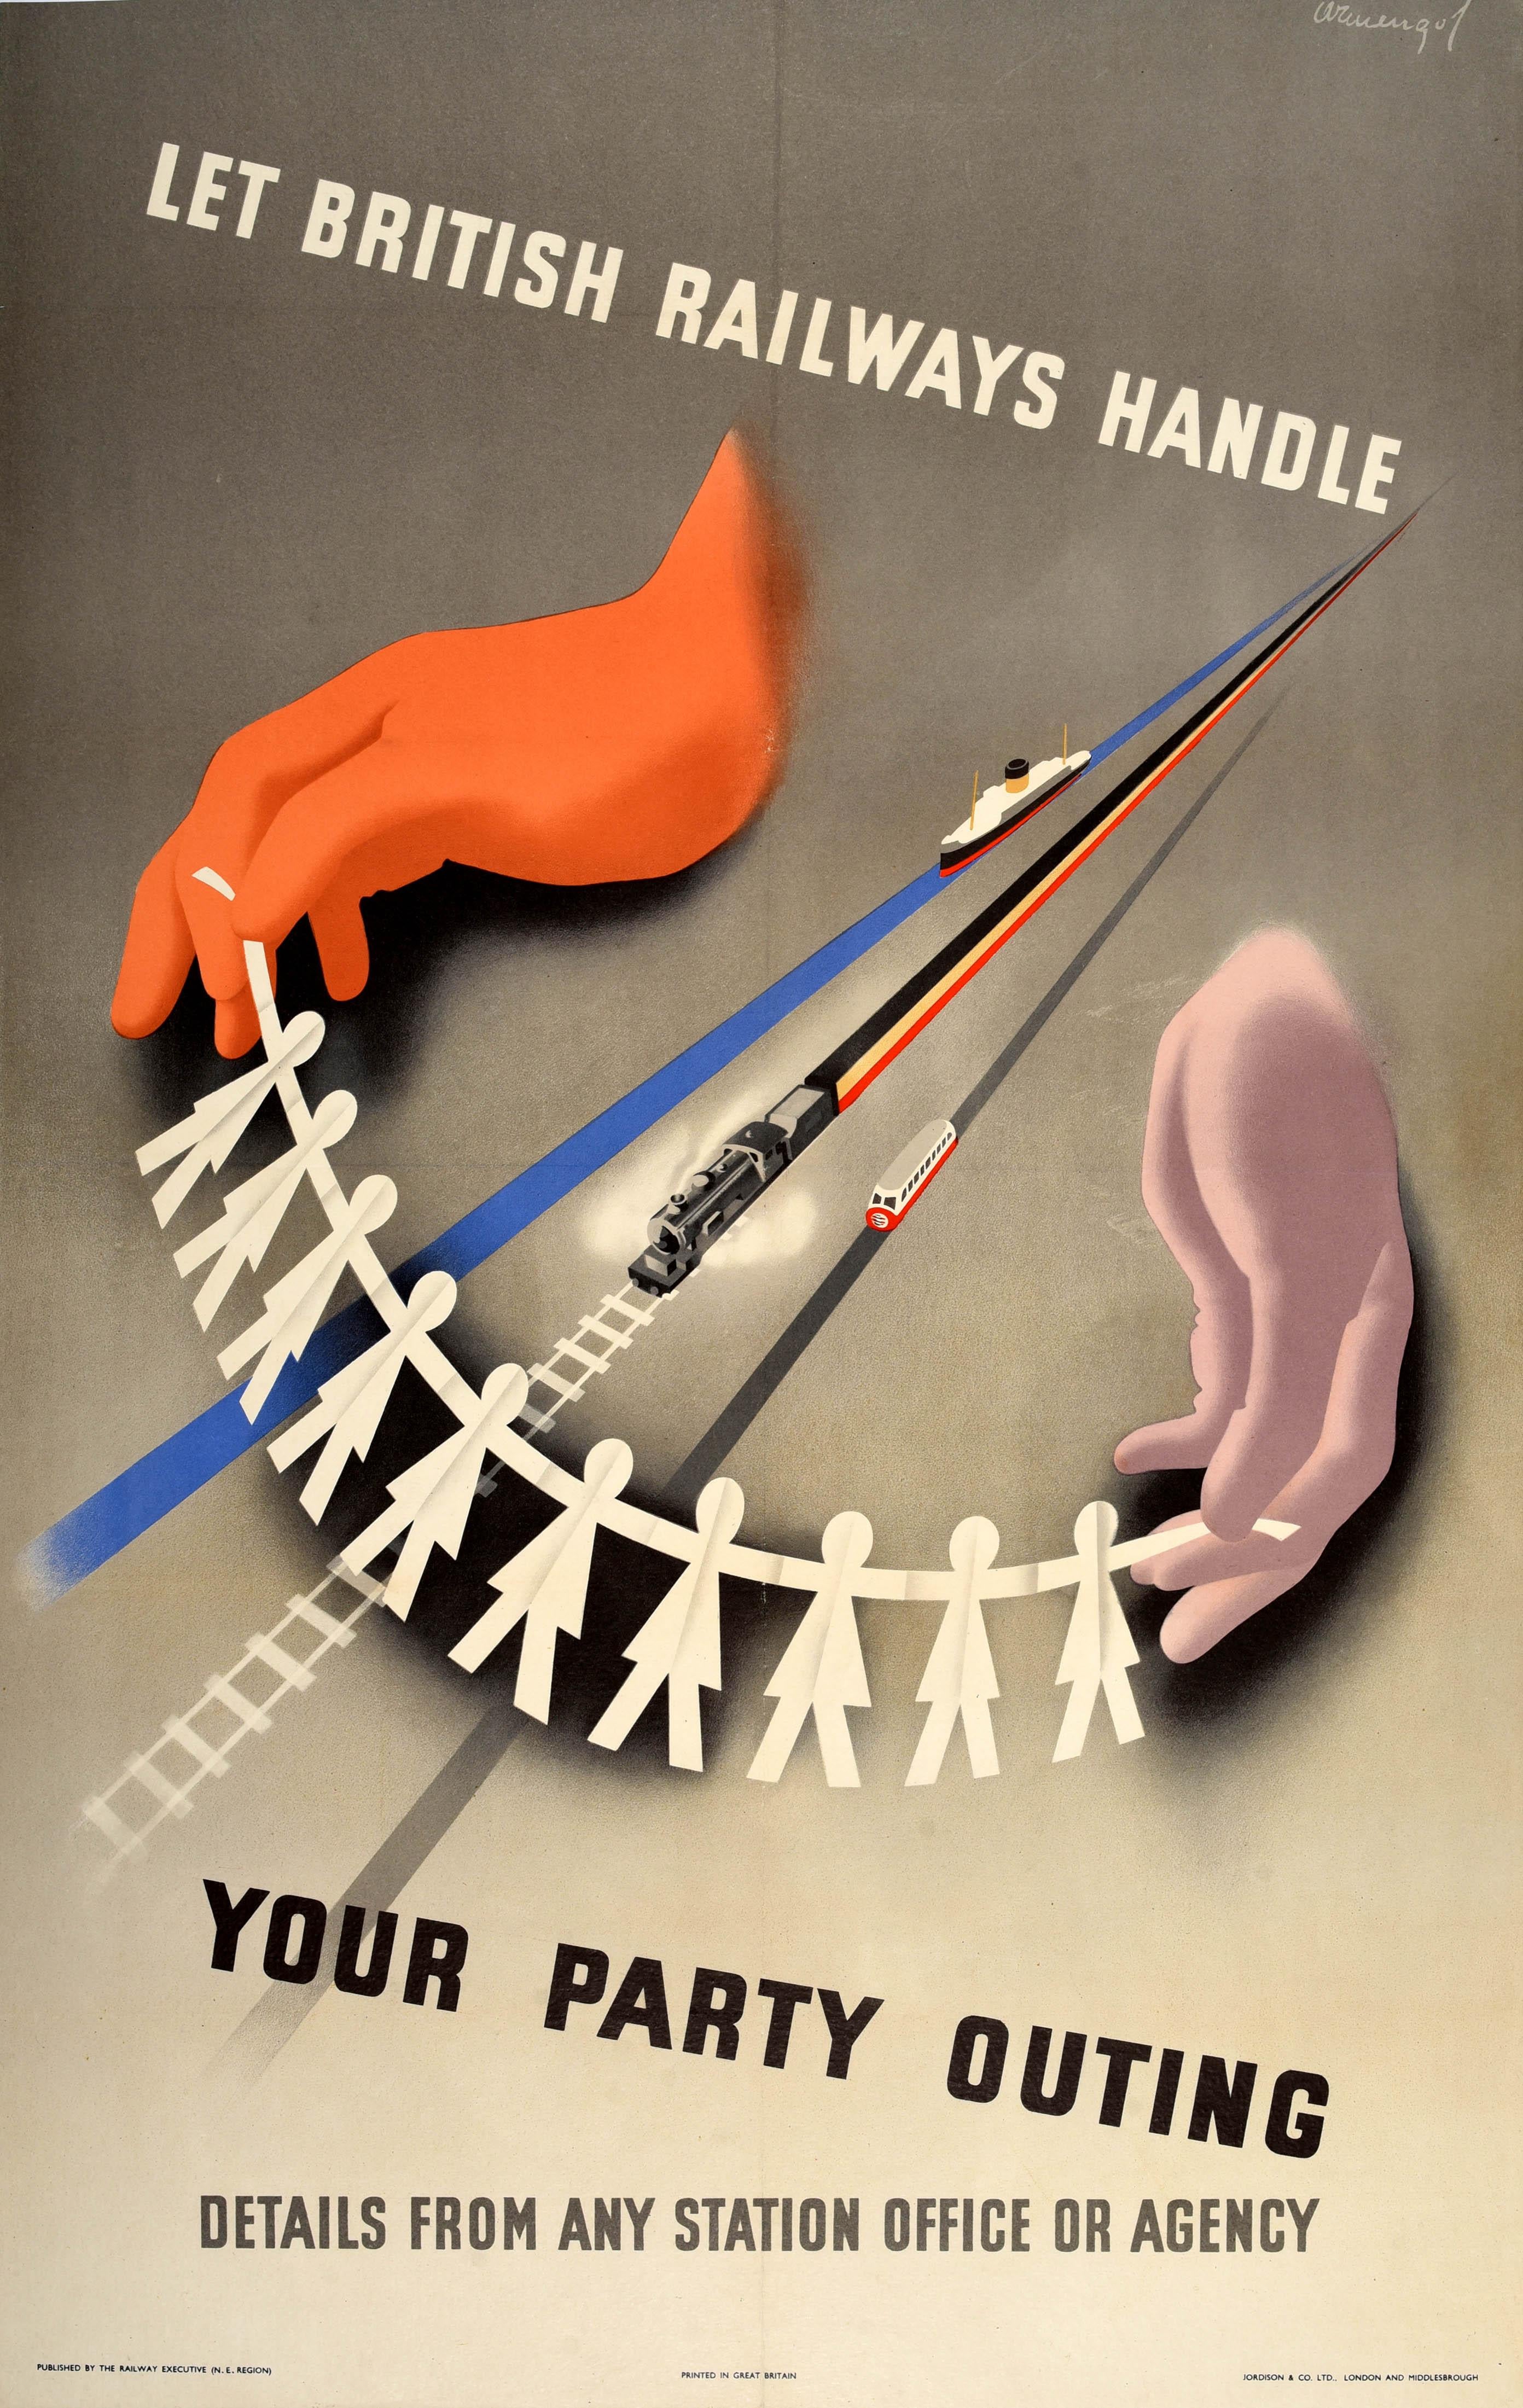 Unknown Print - Original Vintage Travel Advertising Poster British Railways Handle Party Outing 